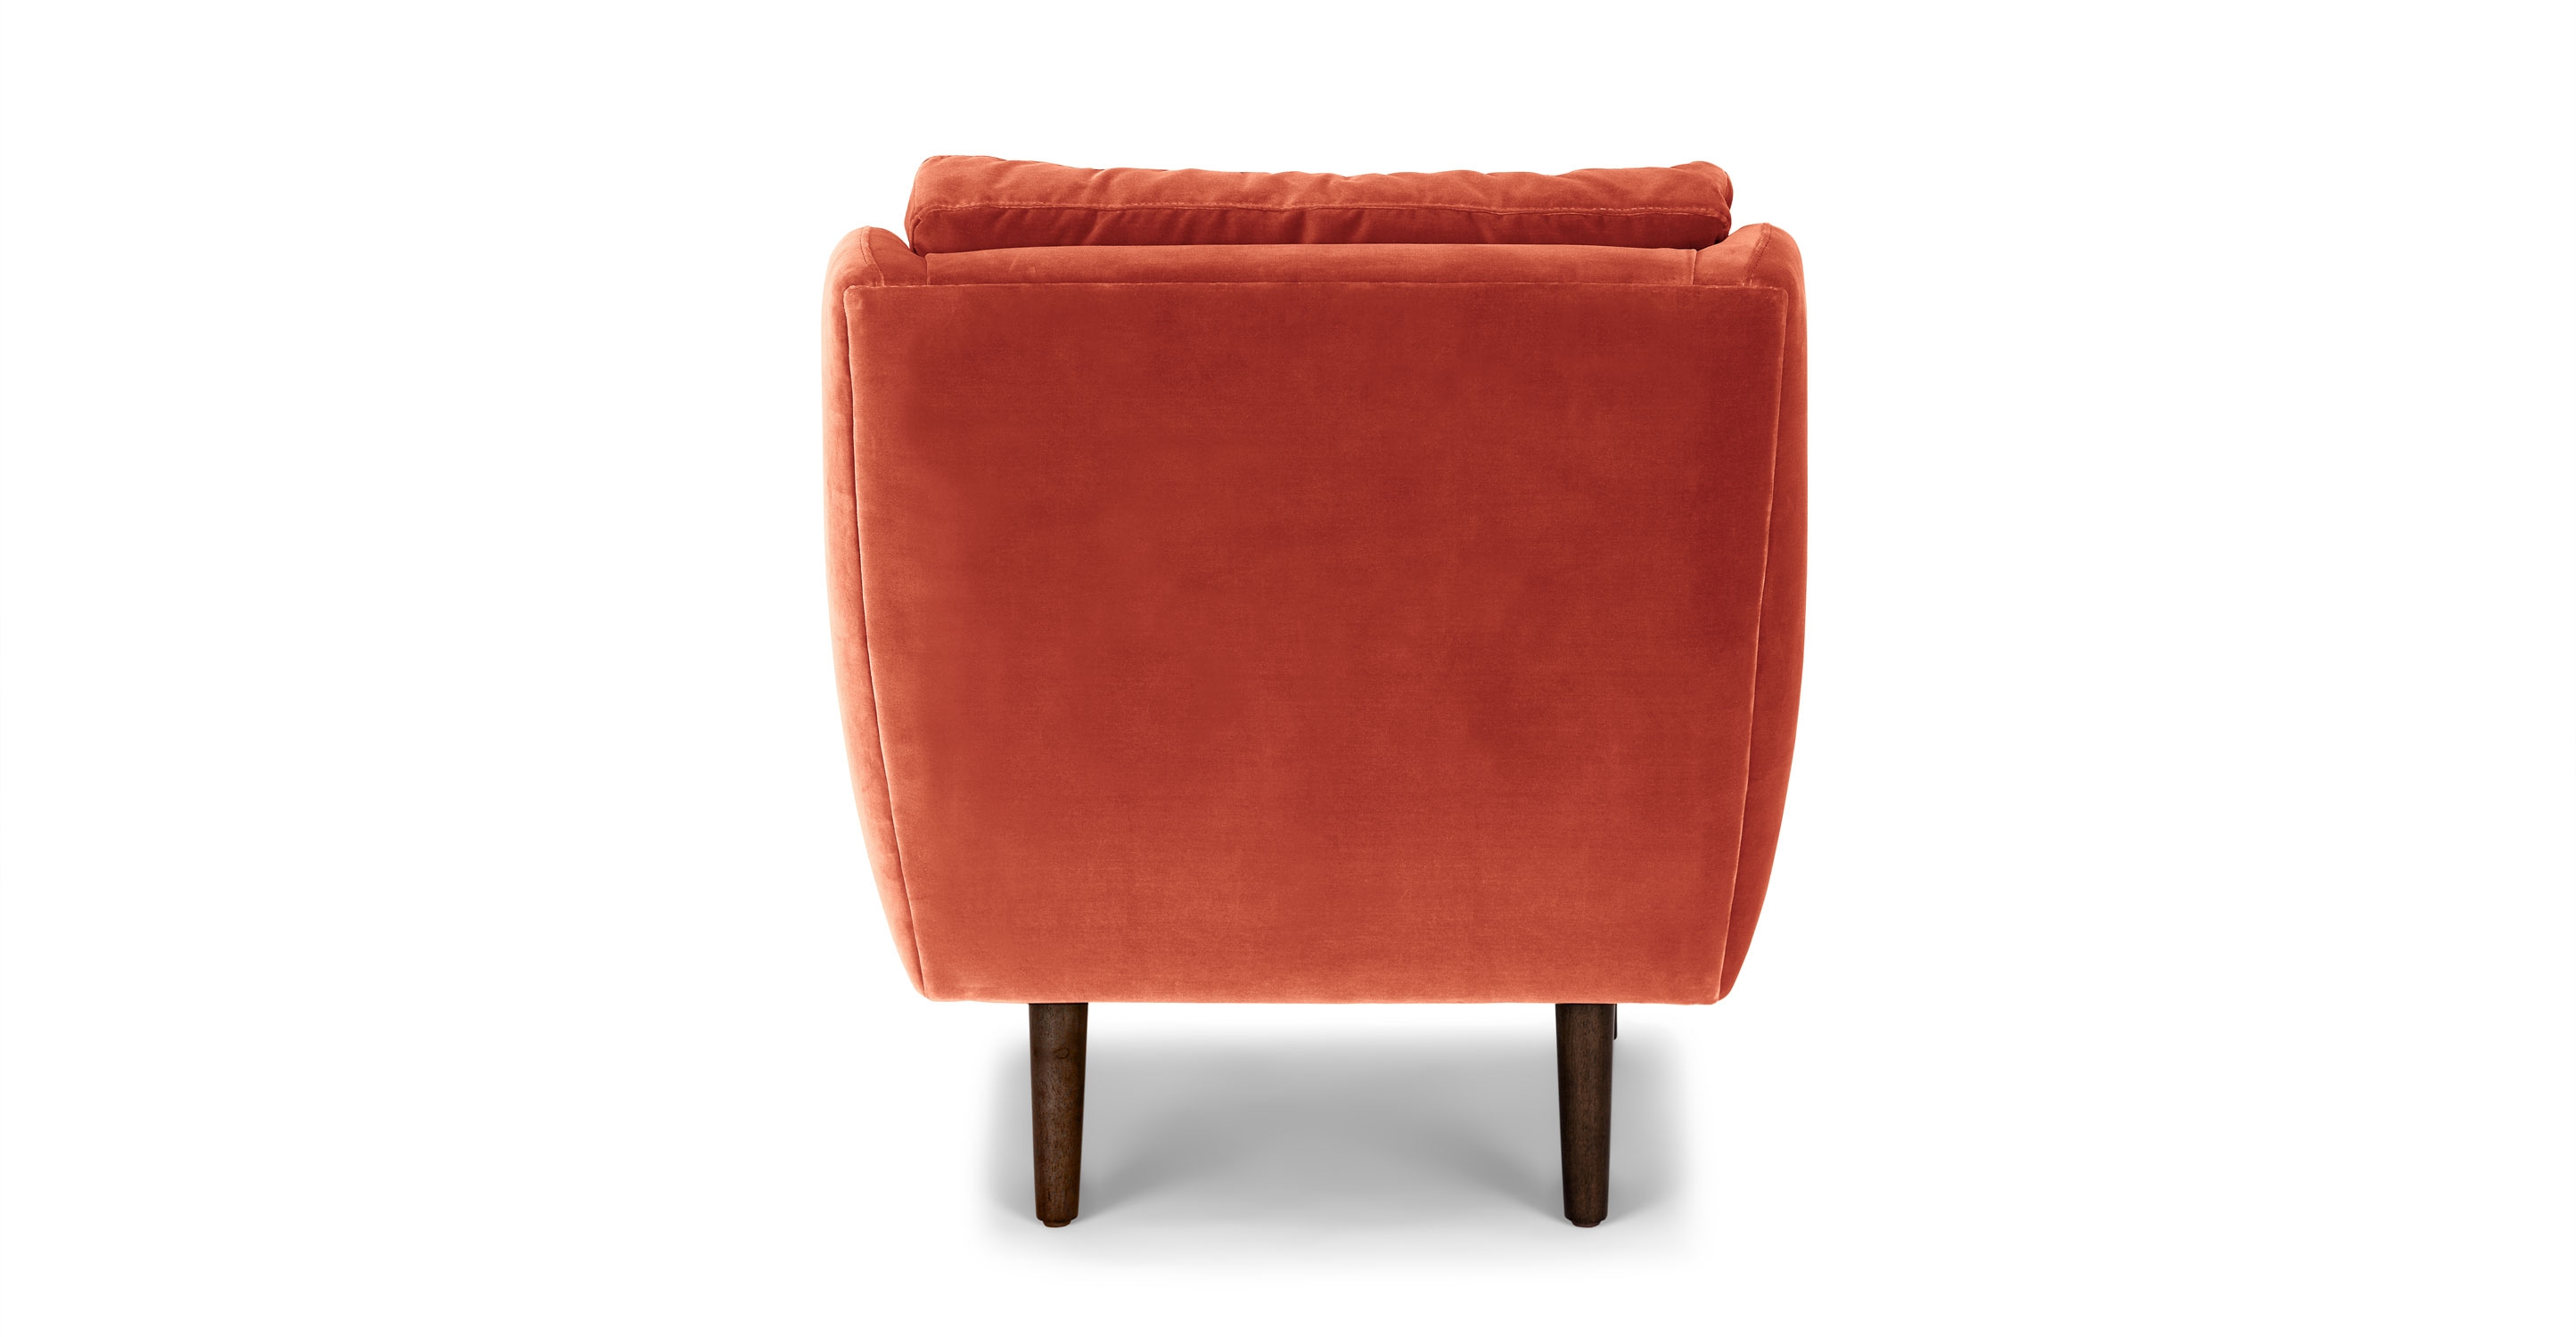 Matrix Persimmon Orange Chair - Image 3